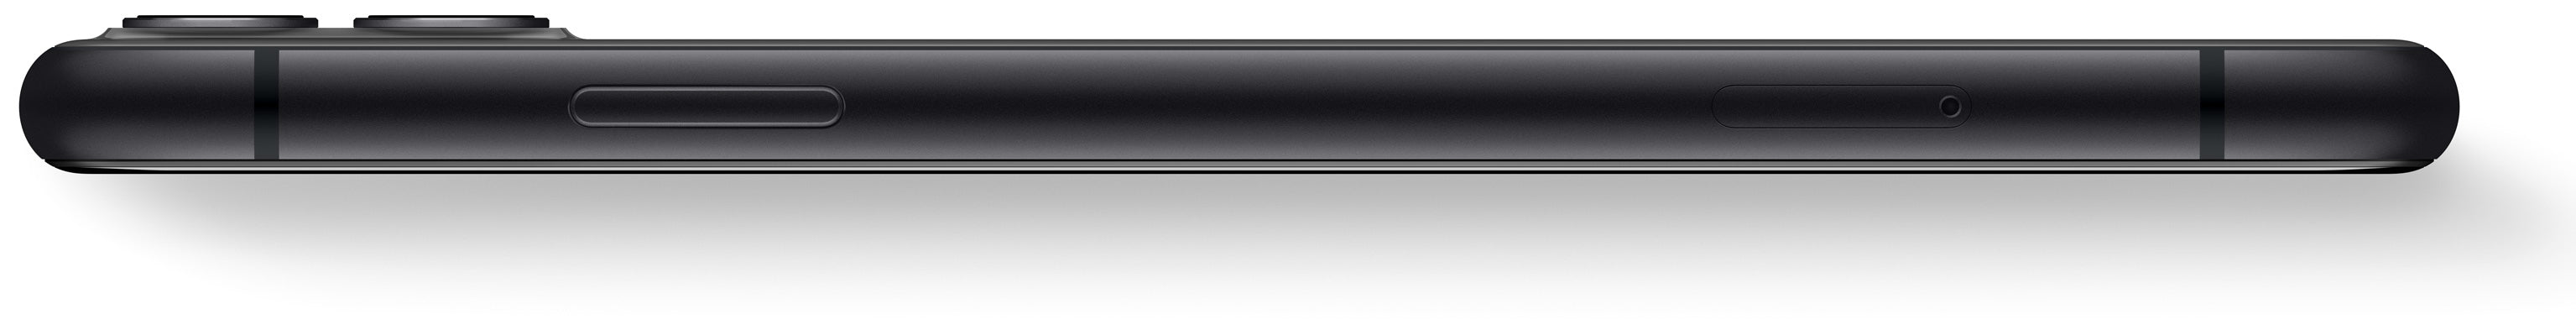 Apple iPhone 11 128gb Black - 5